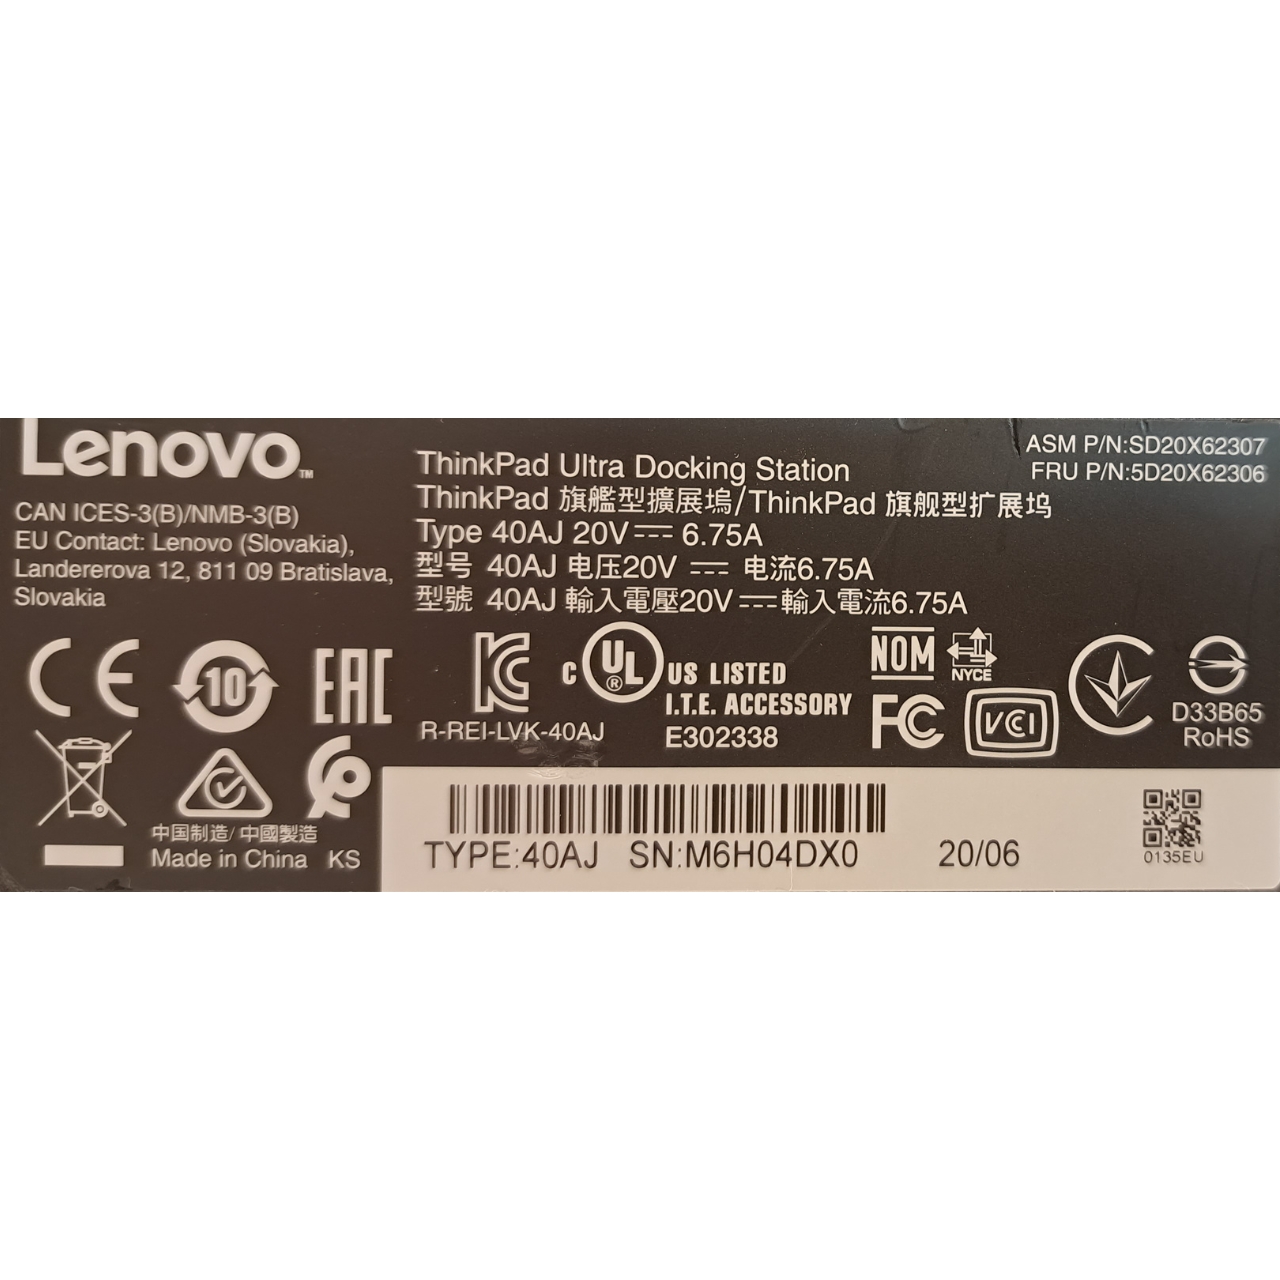 Lenovo ThinkPad Ultra Docking Station 40AJ - Gebraucht - Sehr gut